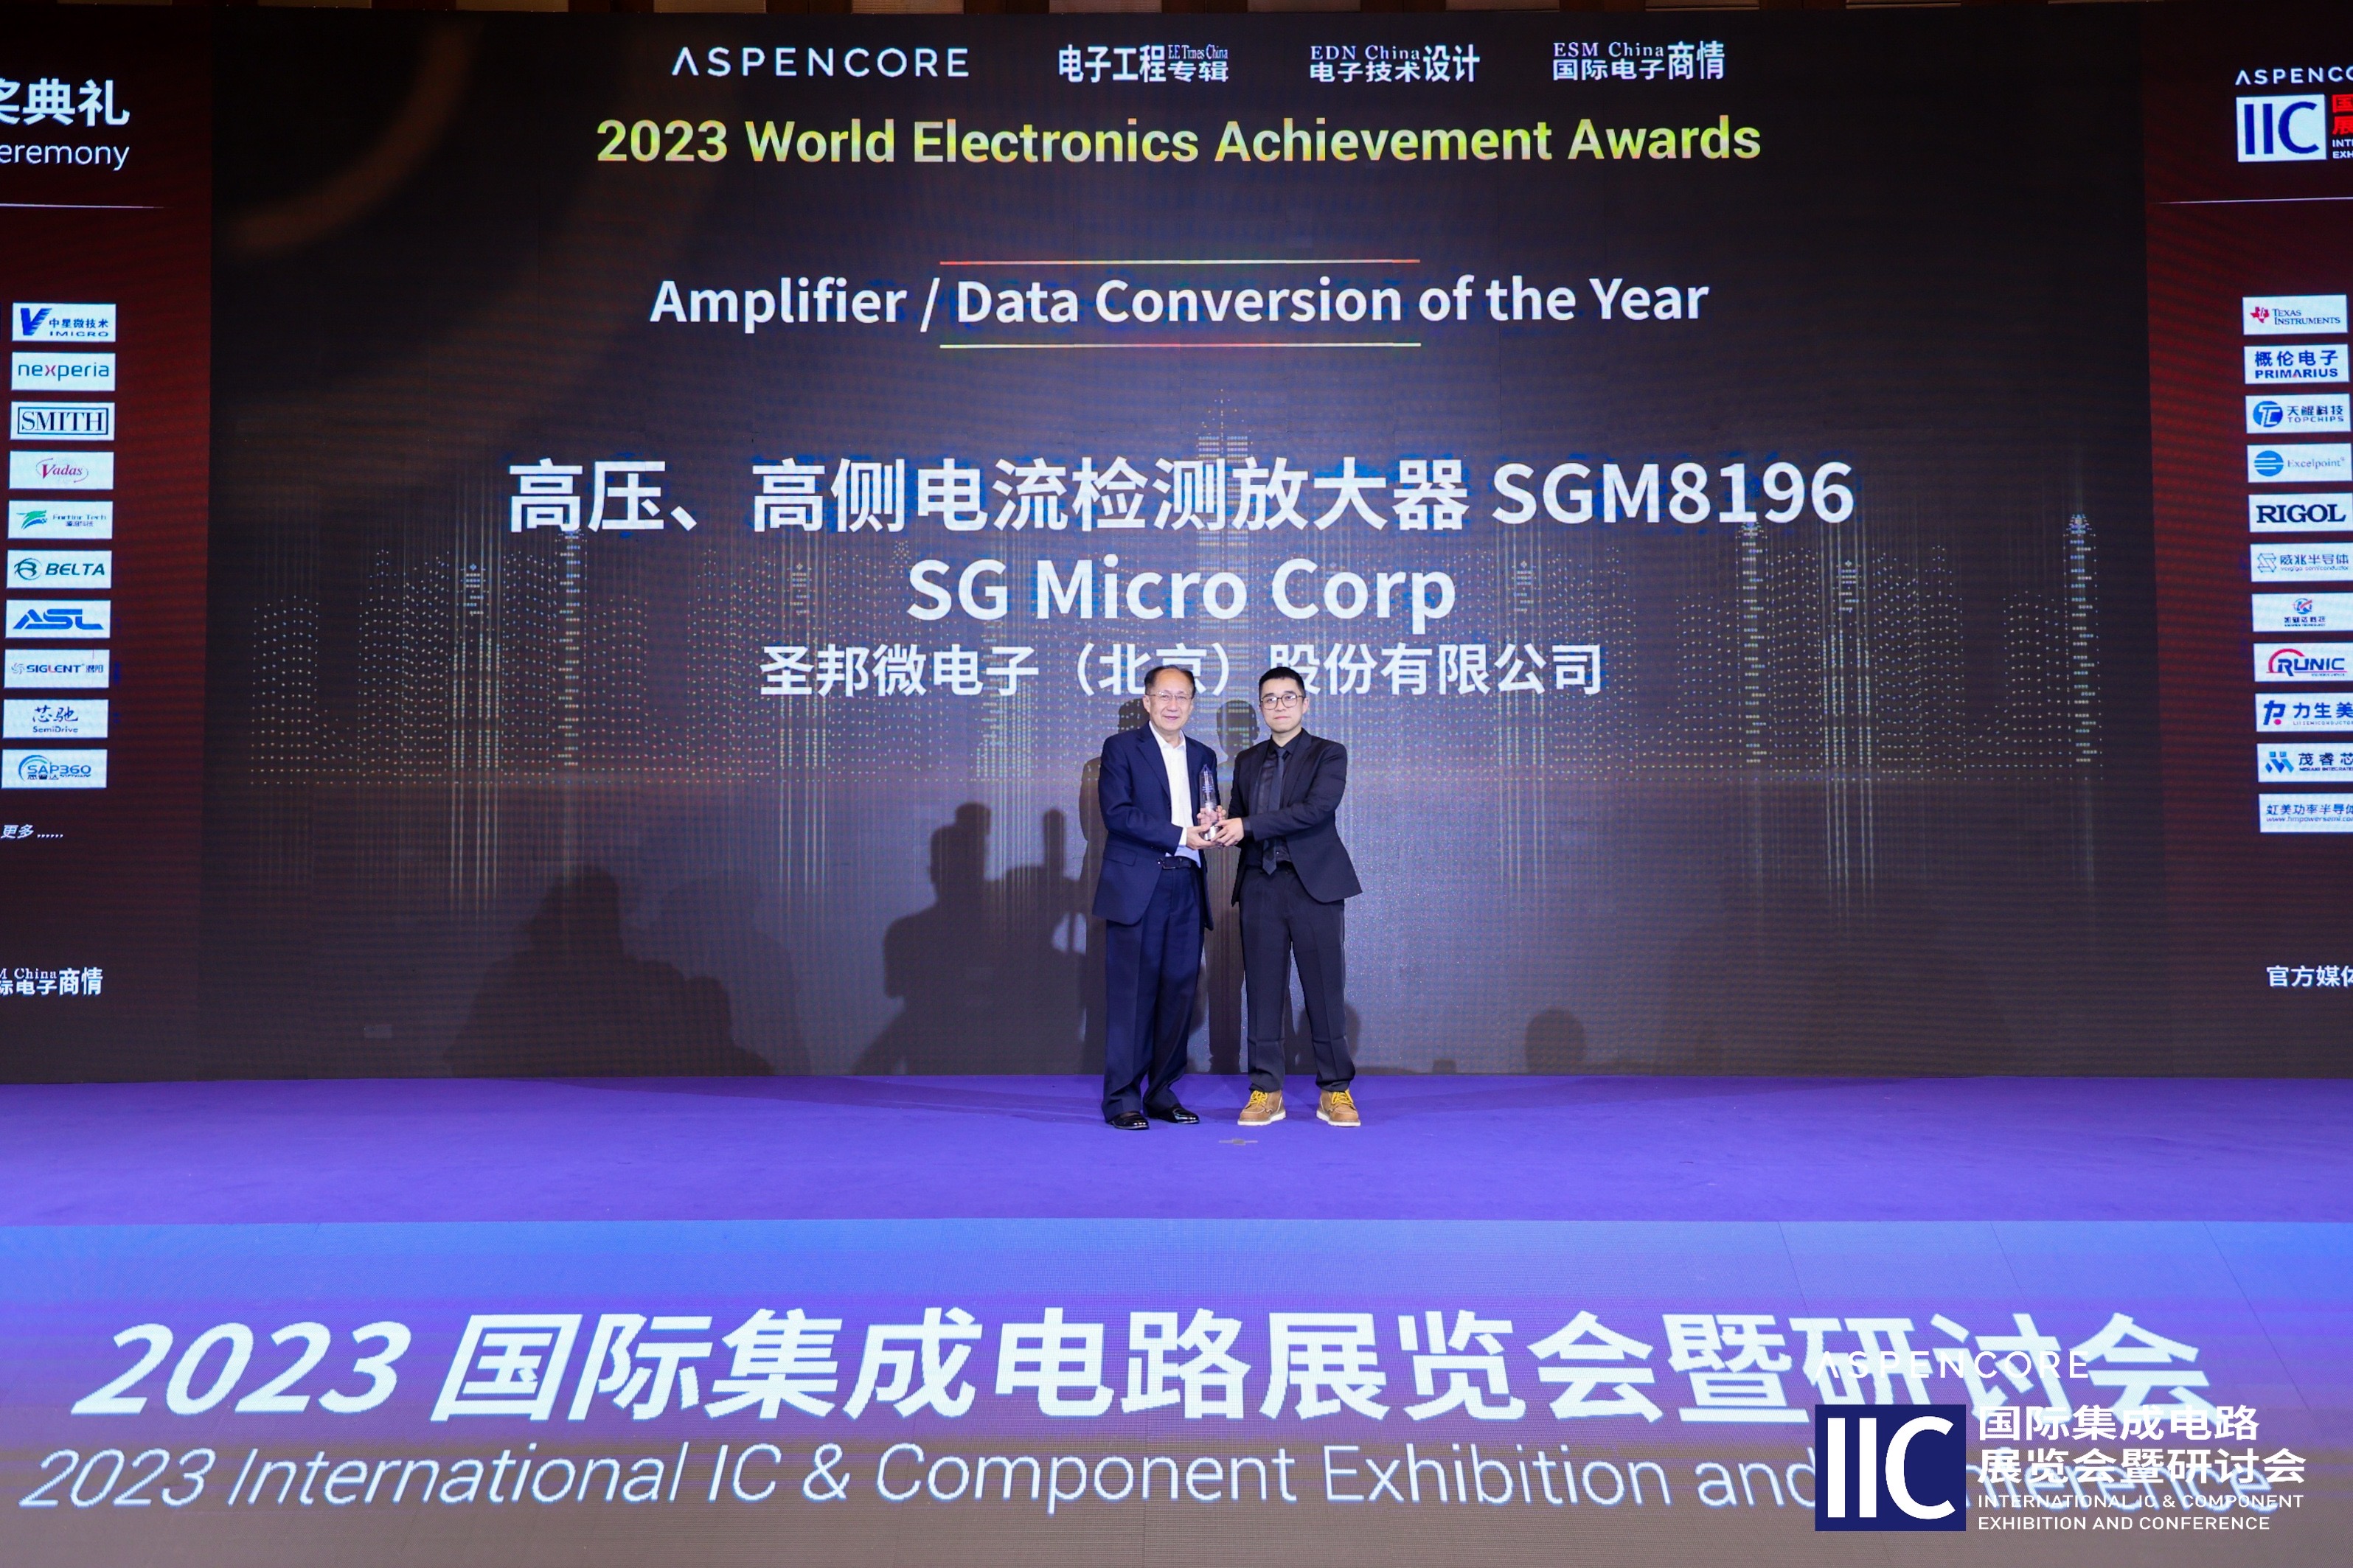 SGM8196 荣获 2023 全球电子成就奖“年度创新产品奖”